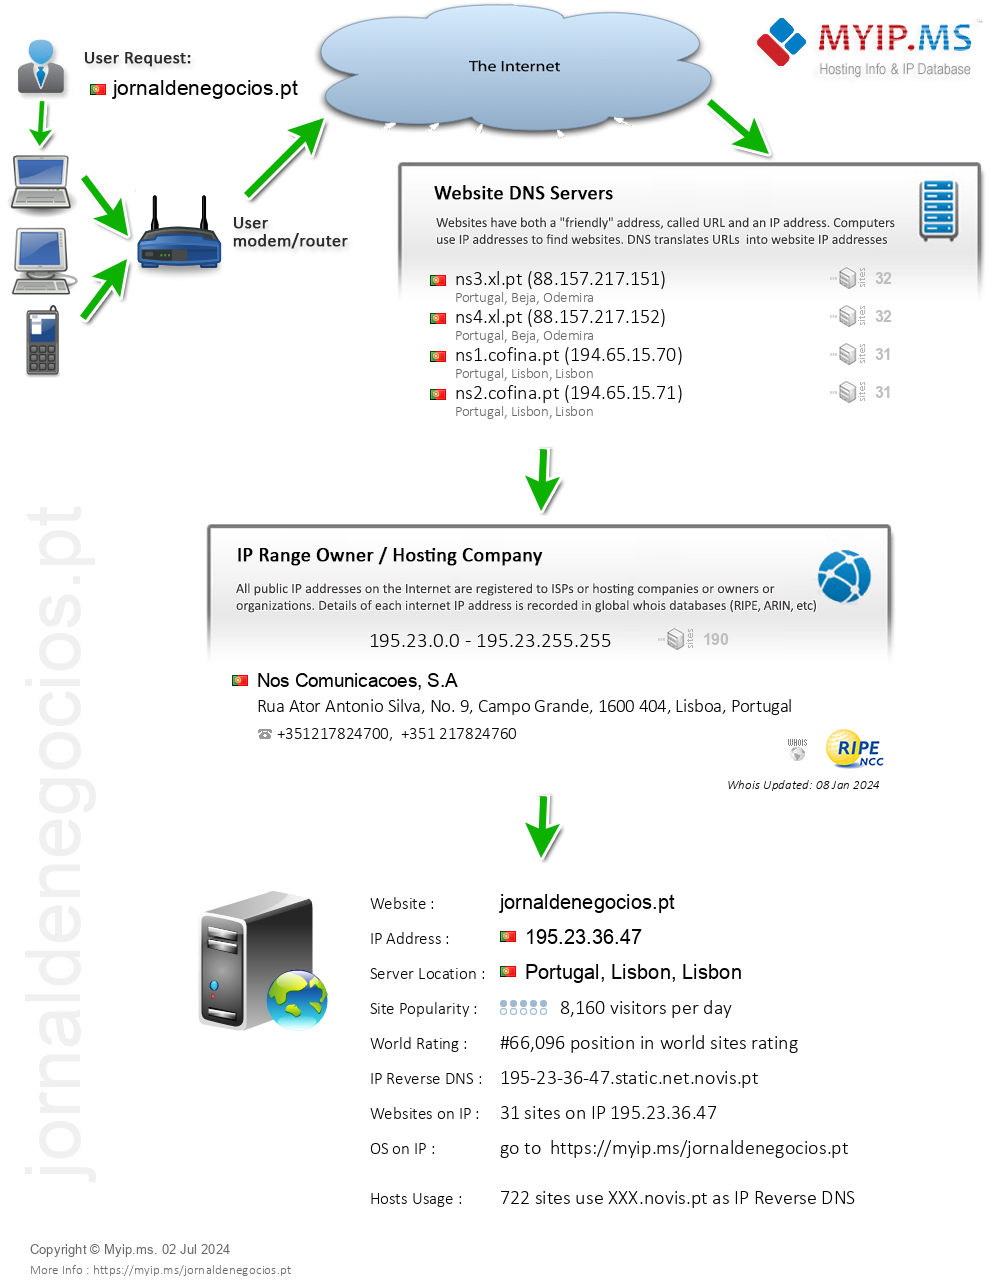 Jornaldenegocios.pt - Website Hosting Visual IP Diagram